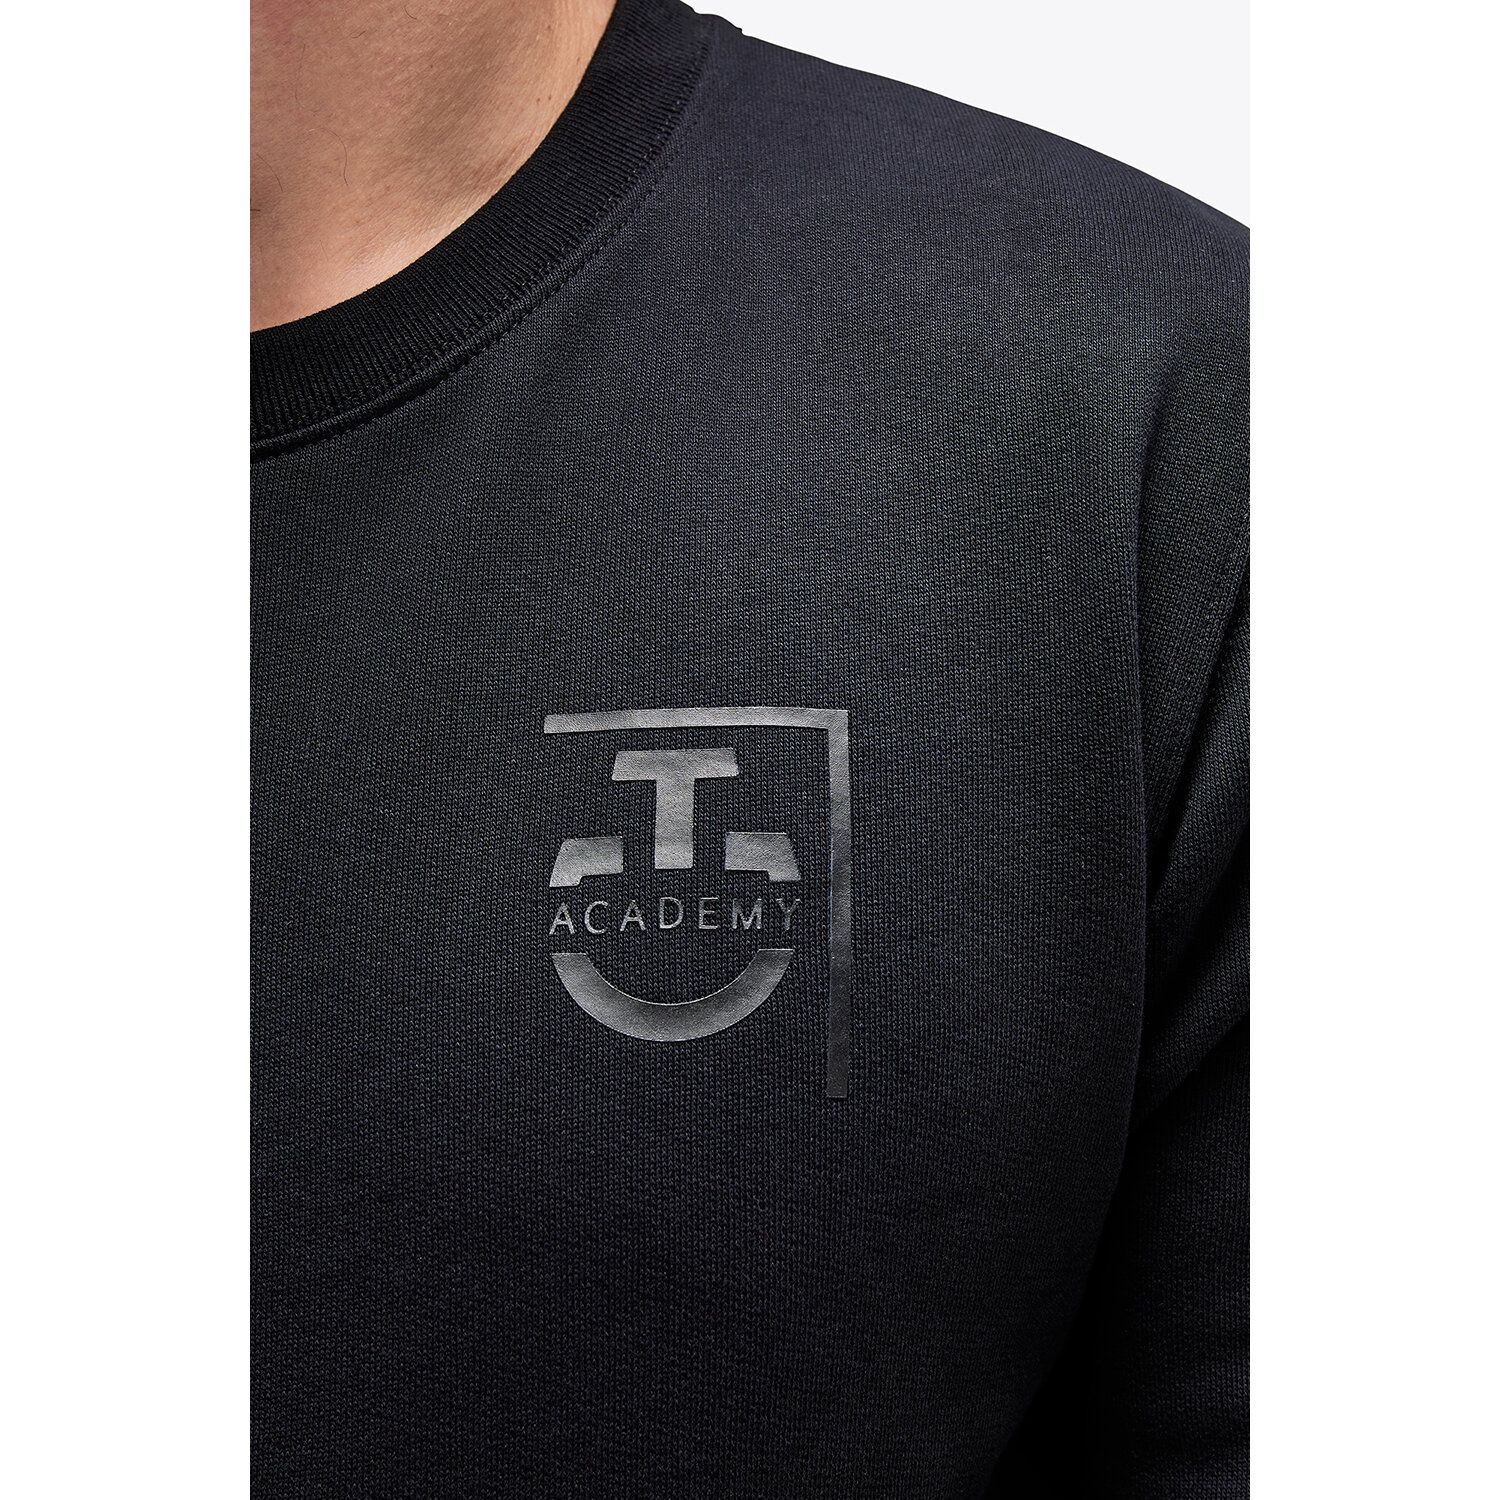 Cavalleria Toscana CT Academy men's cotton crew neck sweatshirt BLACK-4